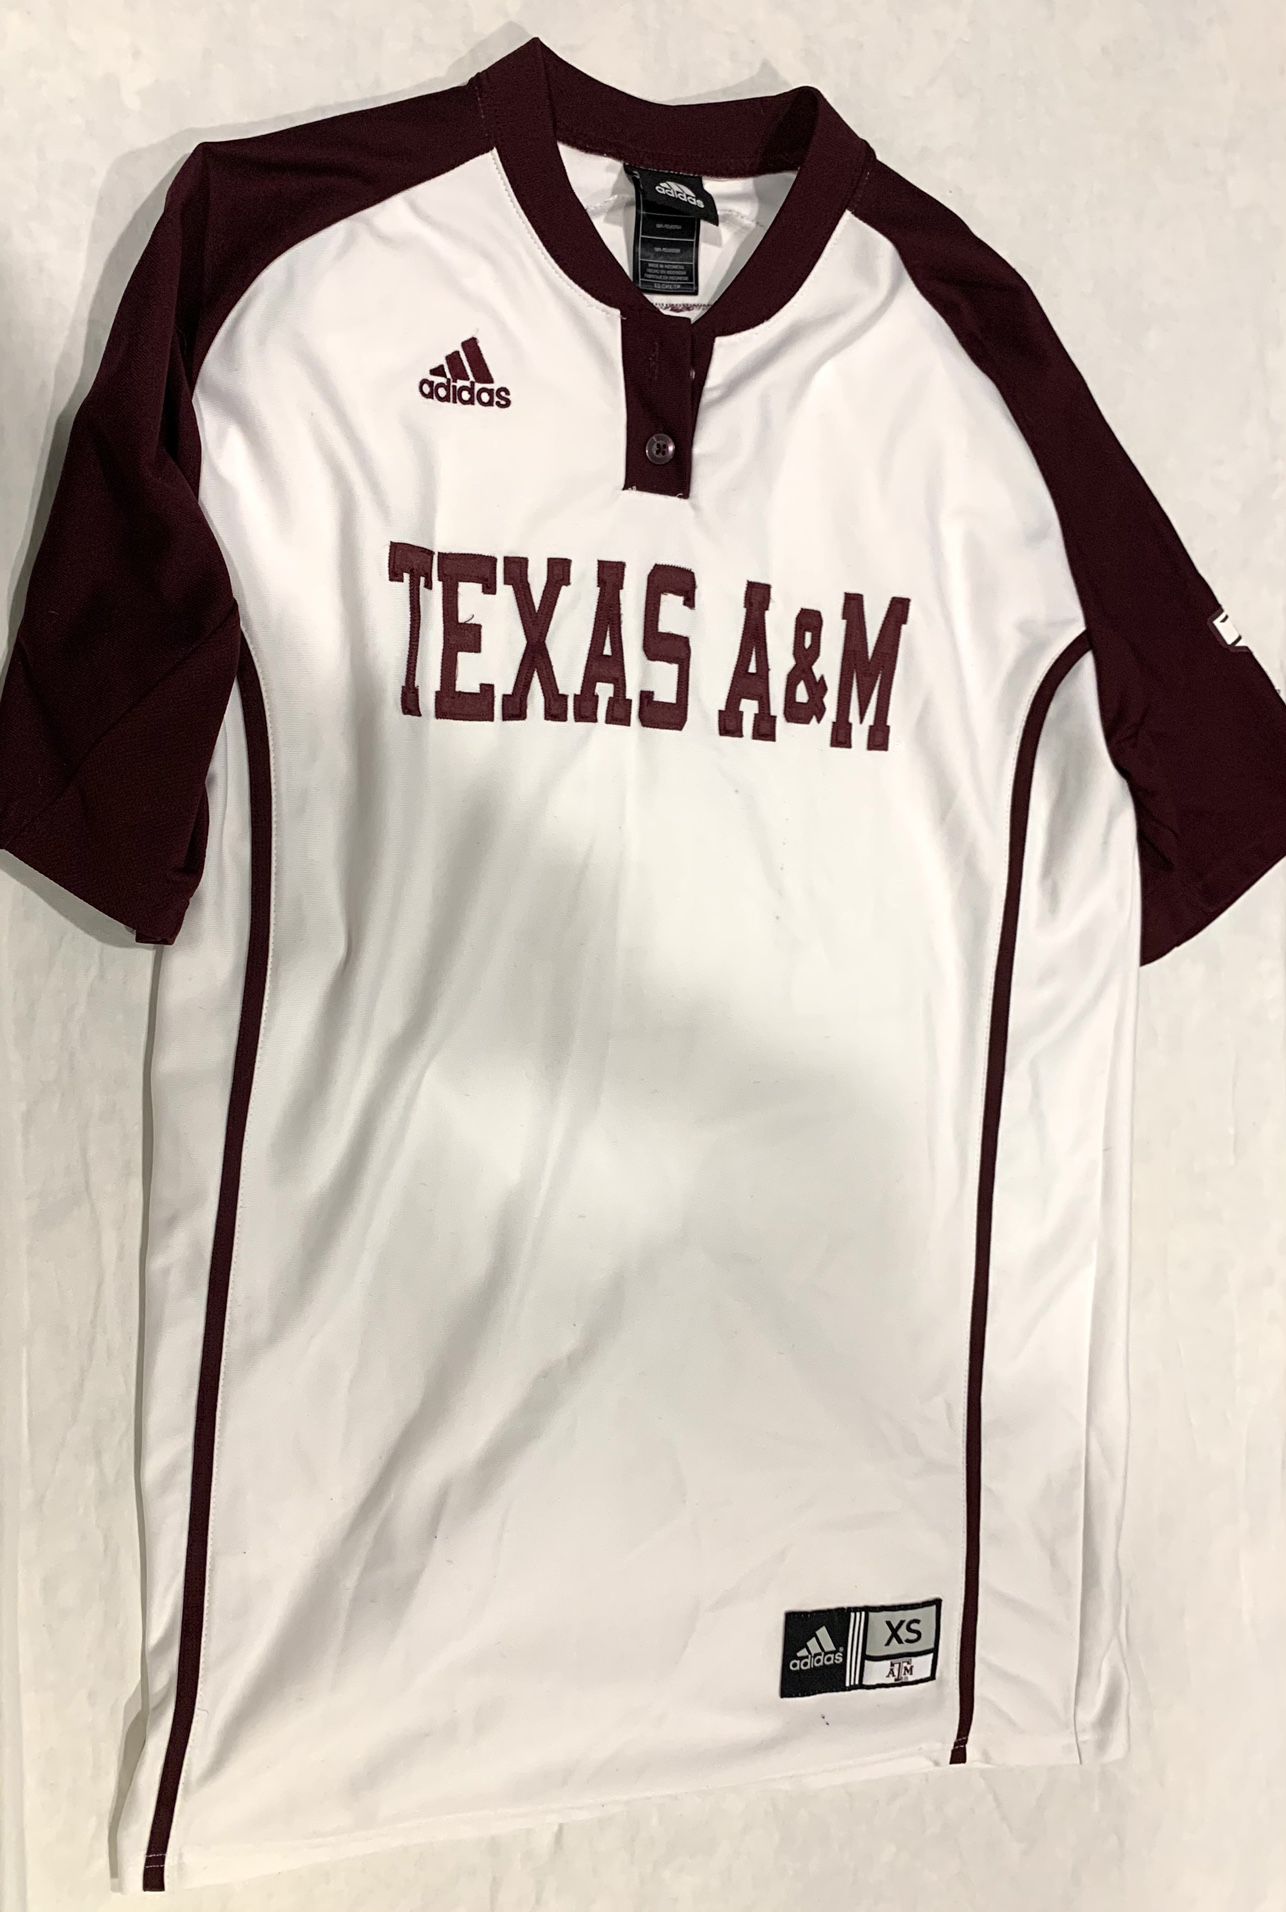 Texas A&M Adidas Baseball White Jersey XS (Fits Larger)